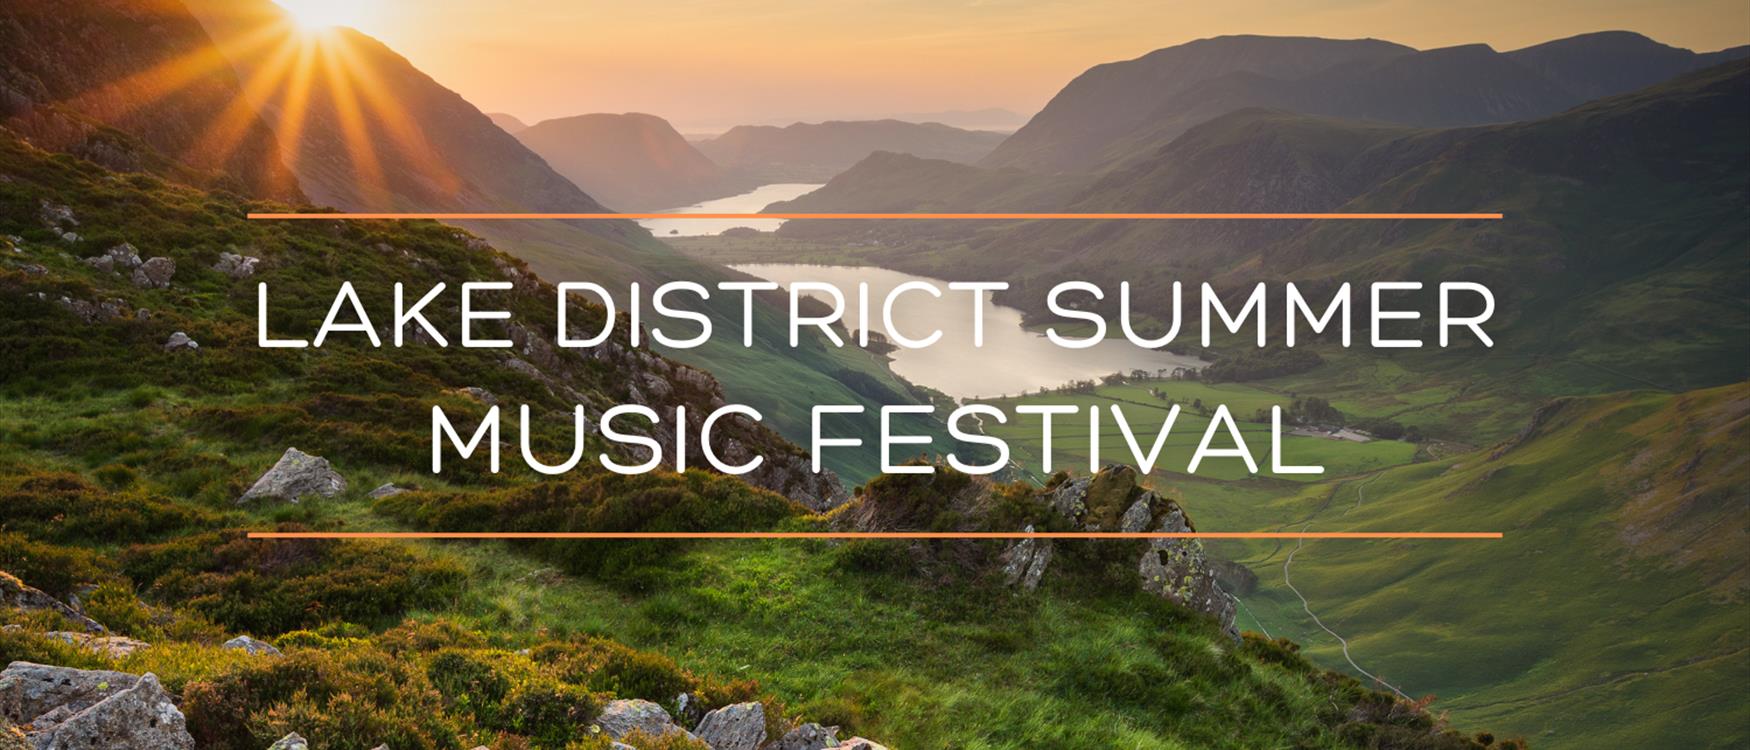 Lake District Summer Music Festival